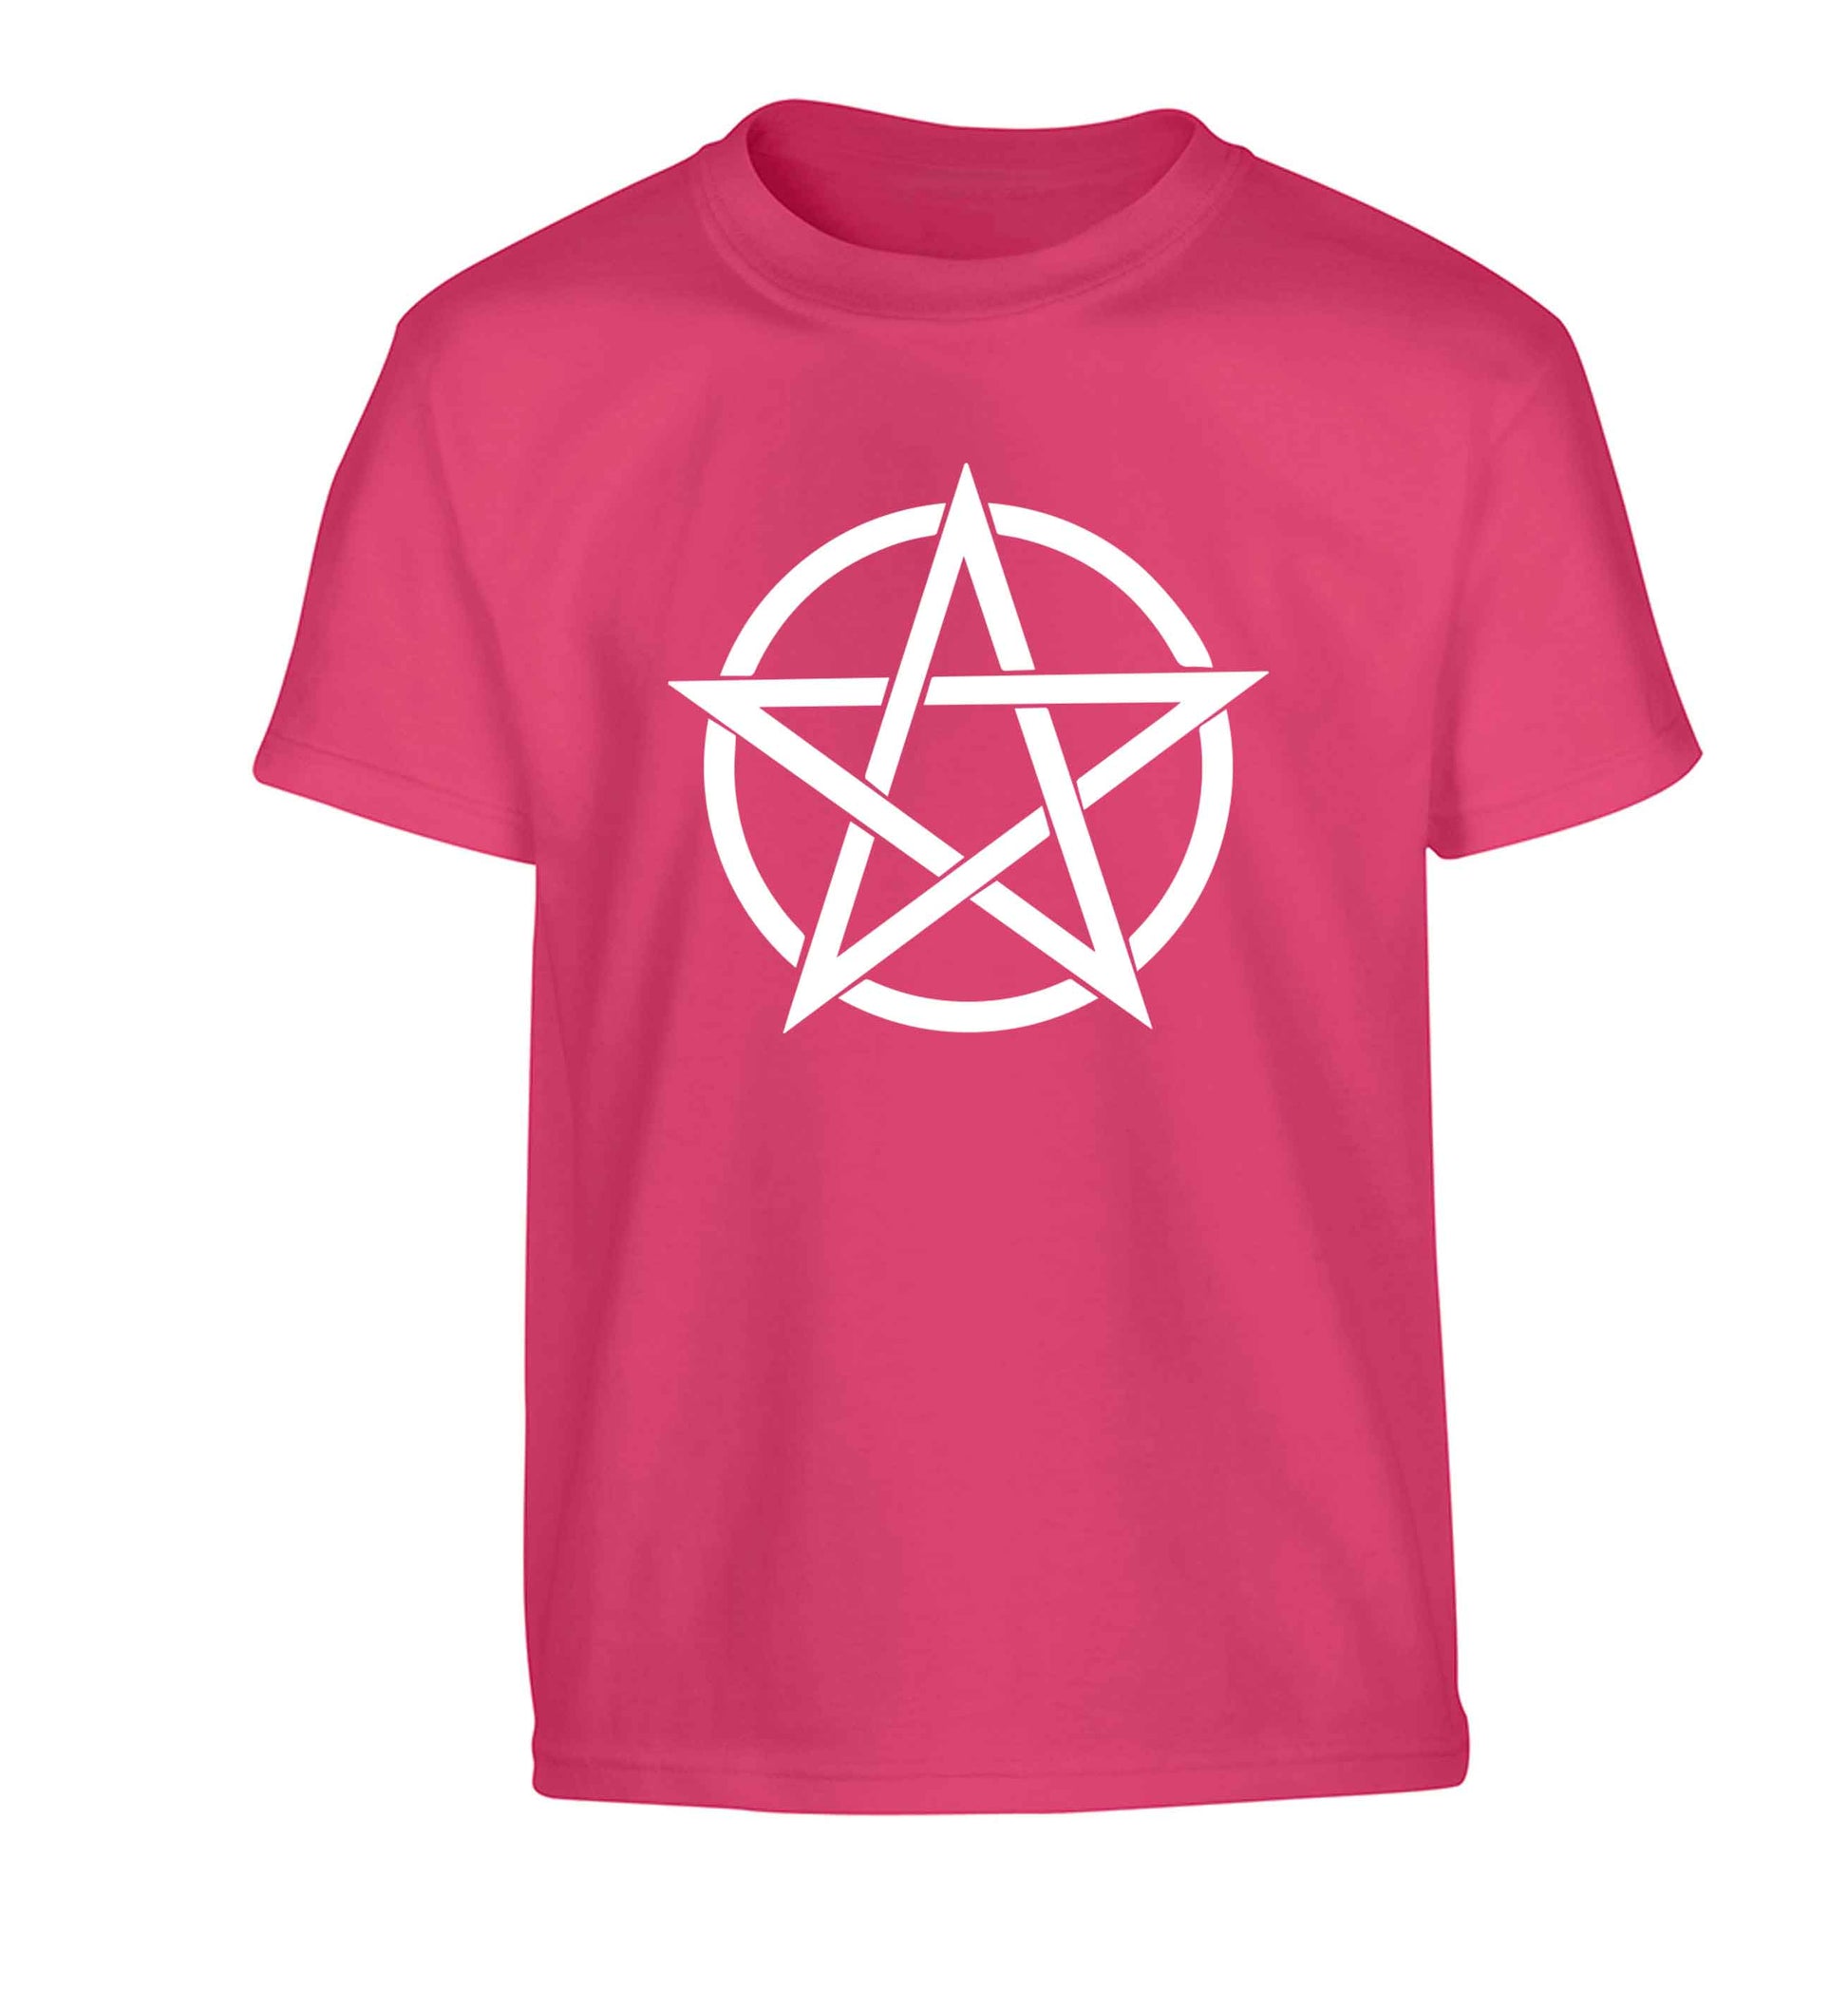 Pentagram symbol Children's pink Tshirt 12-13 Years